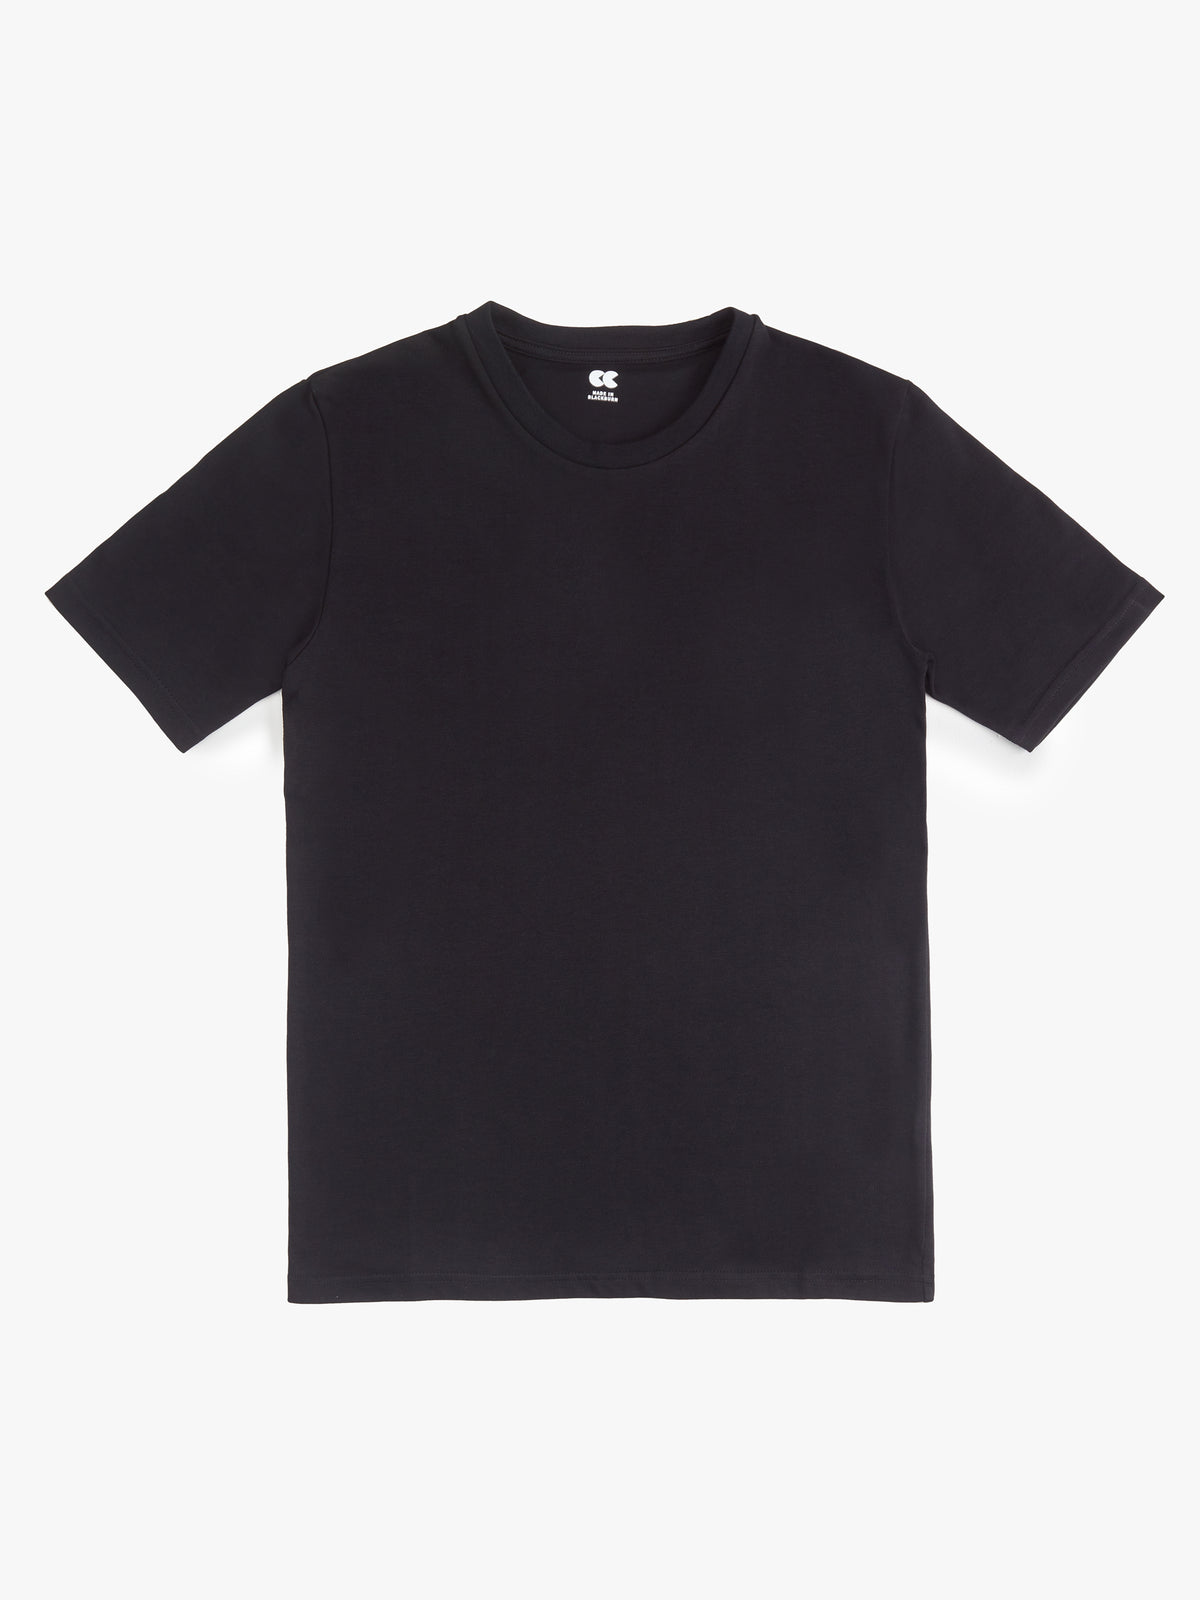 
            Flatlay product shot of short sleeve t shirt in black